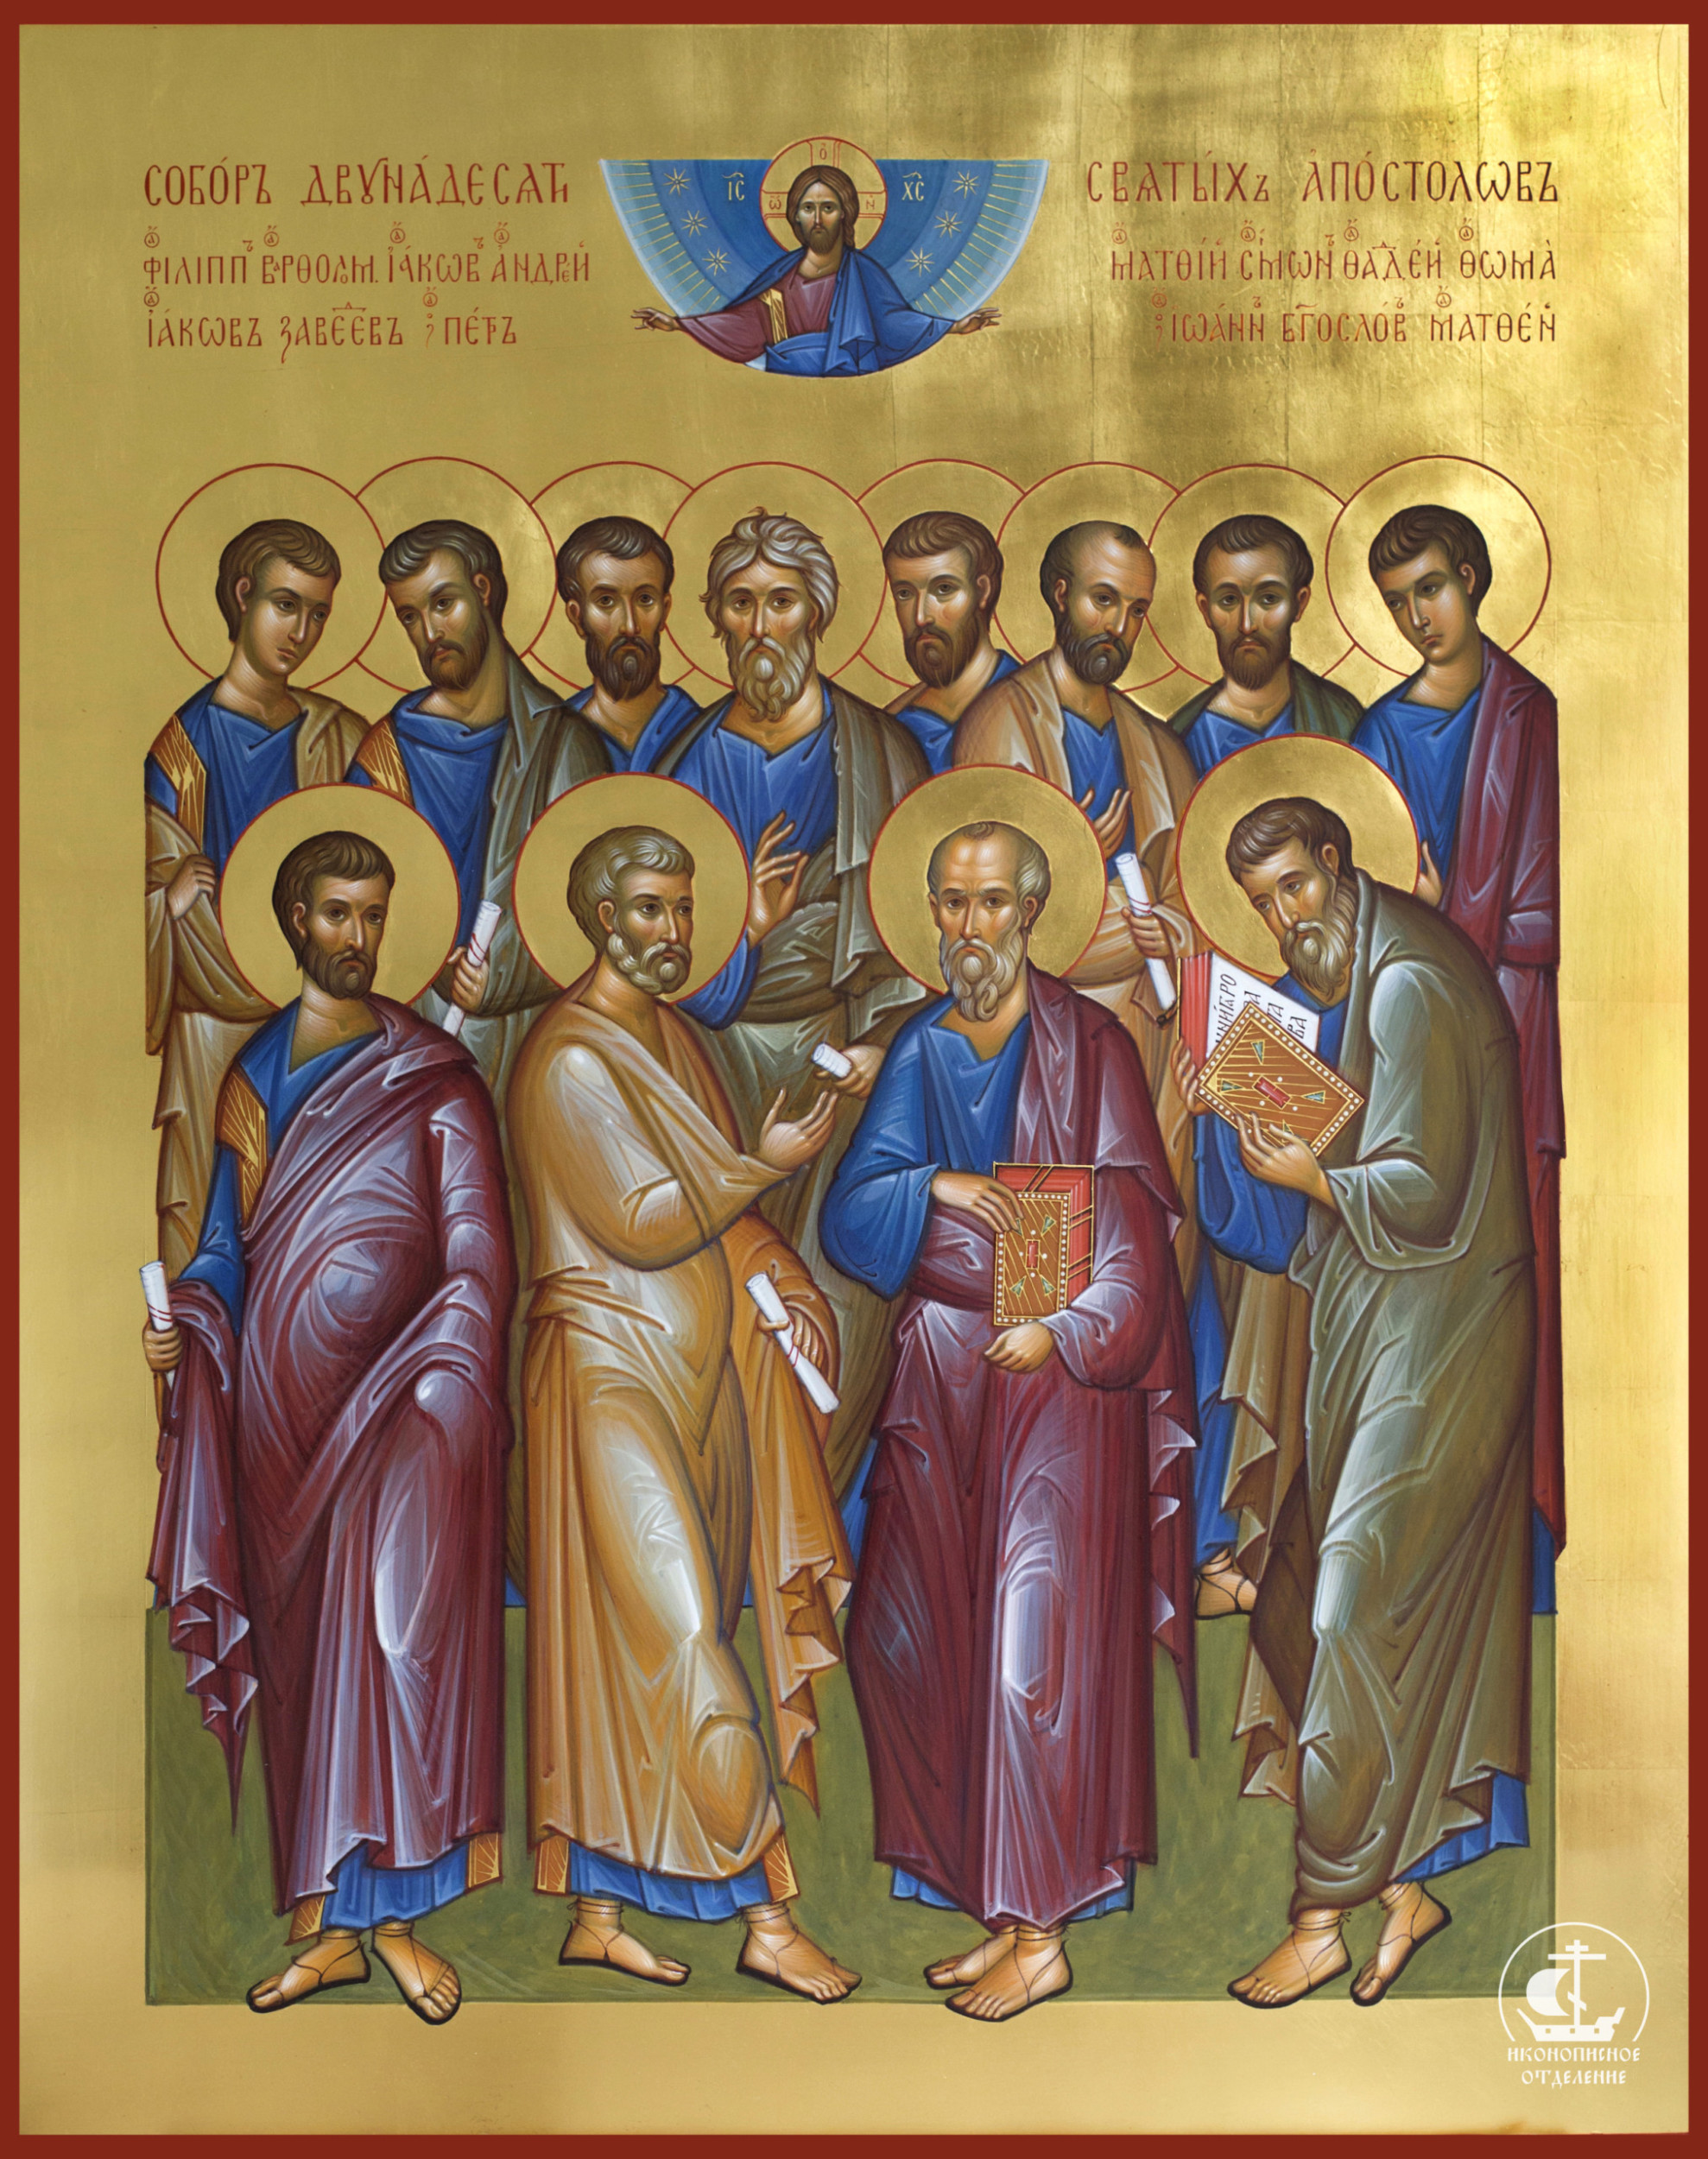 храм двенадцать апостолов